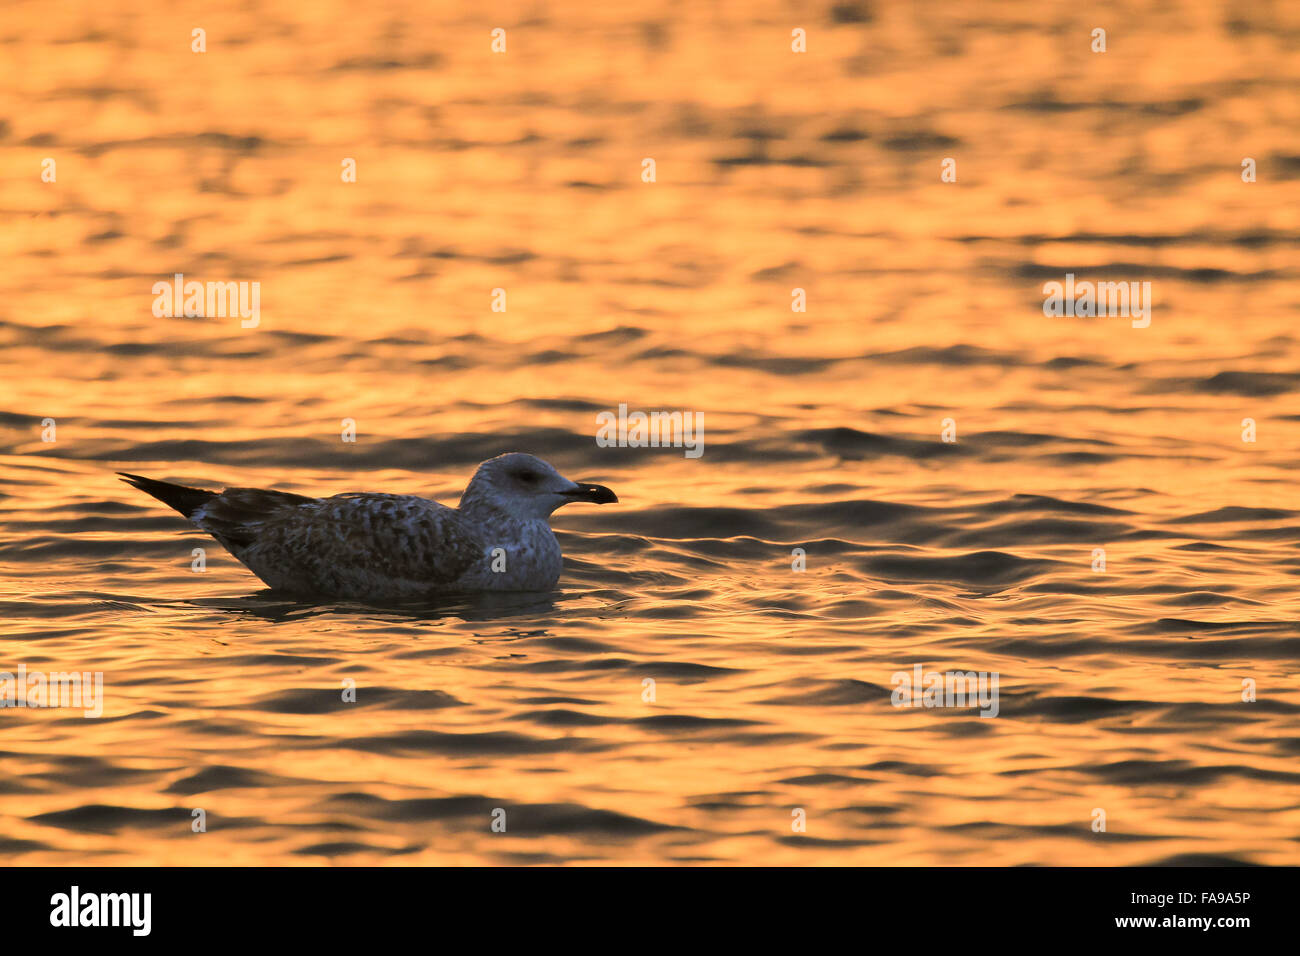 Herring gull swimming in the sea in orange morning light Stock Photo